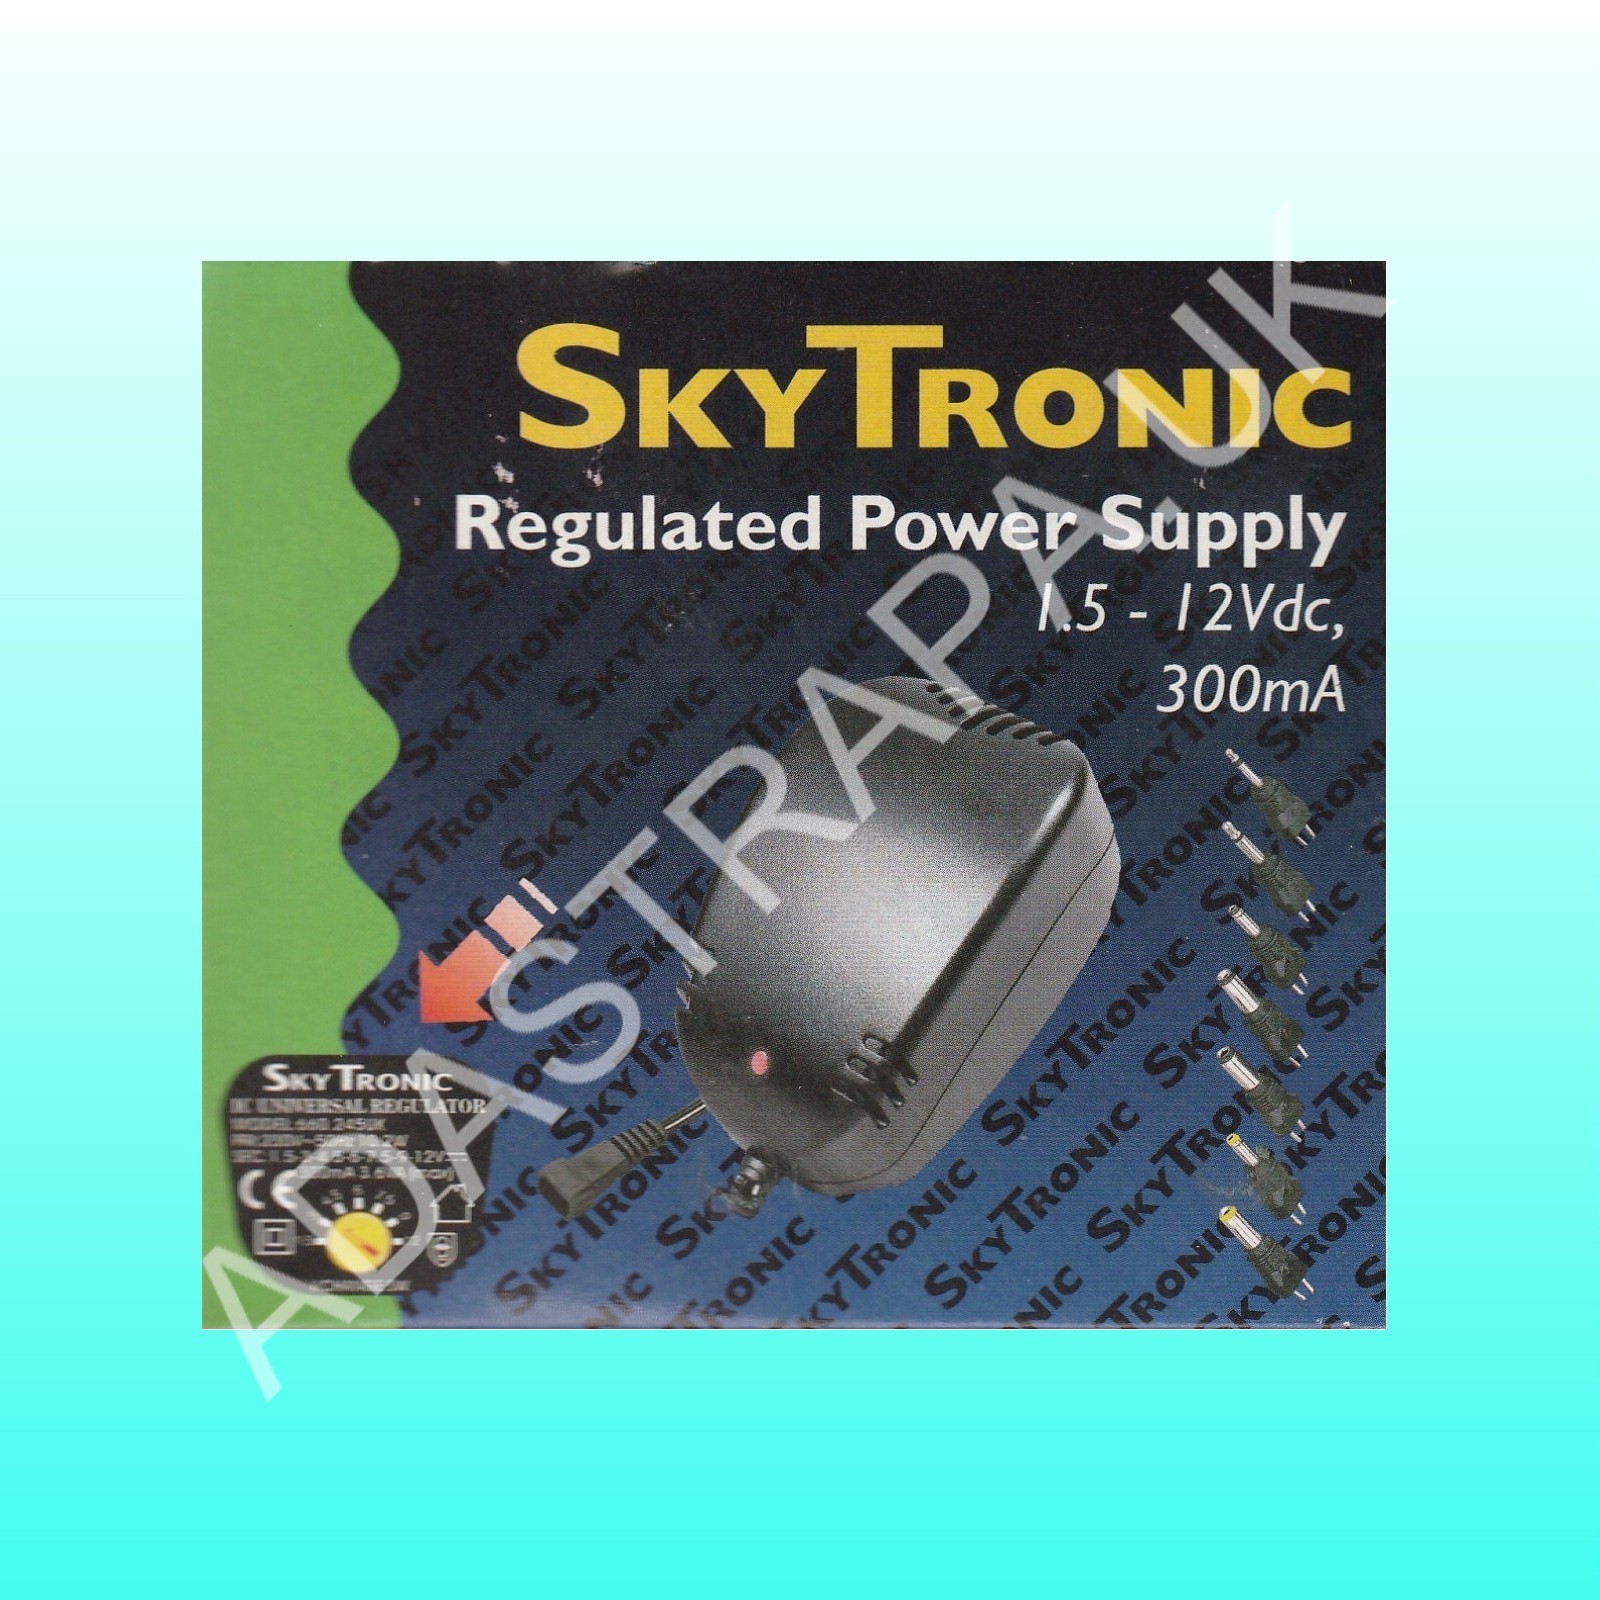 SkyTronic Regulated Power Supply 1.5 - 12V 300mA - 660.245UK